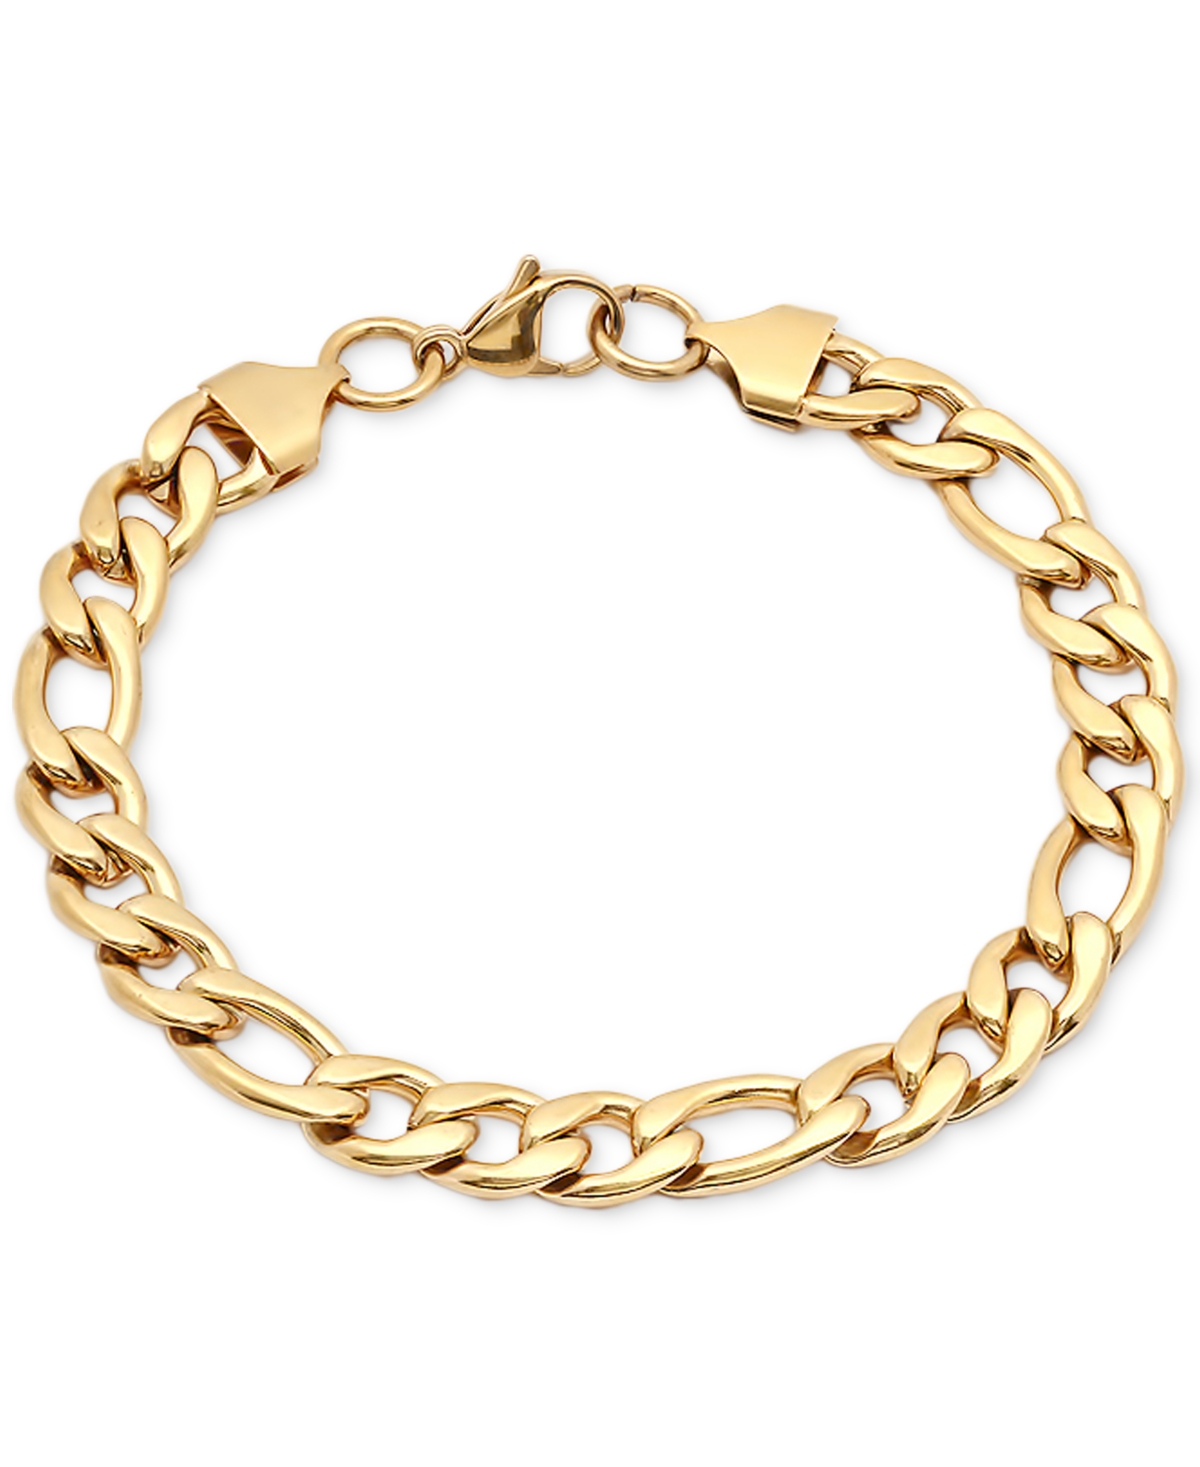 Shop Steeltime Men's 18k Gold-plated Stainless Steel Figaro Link Bracelet